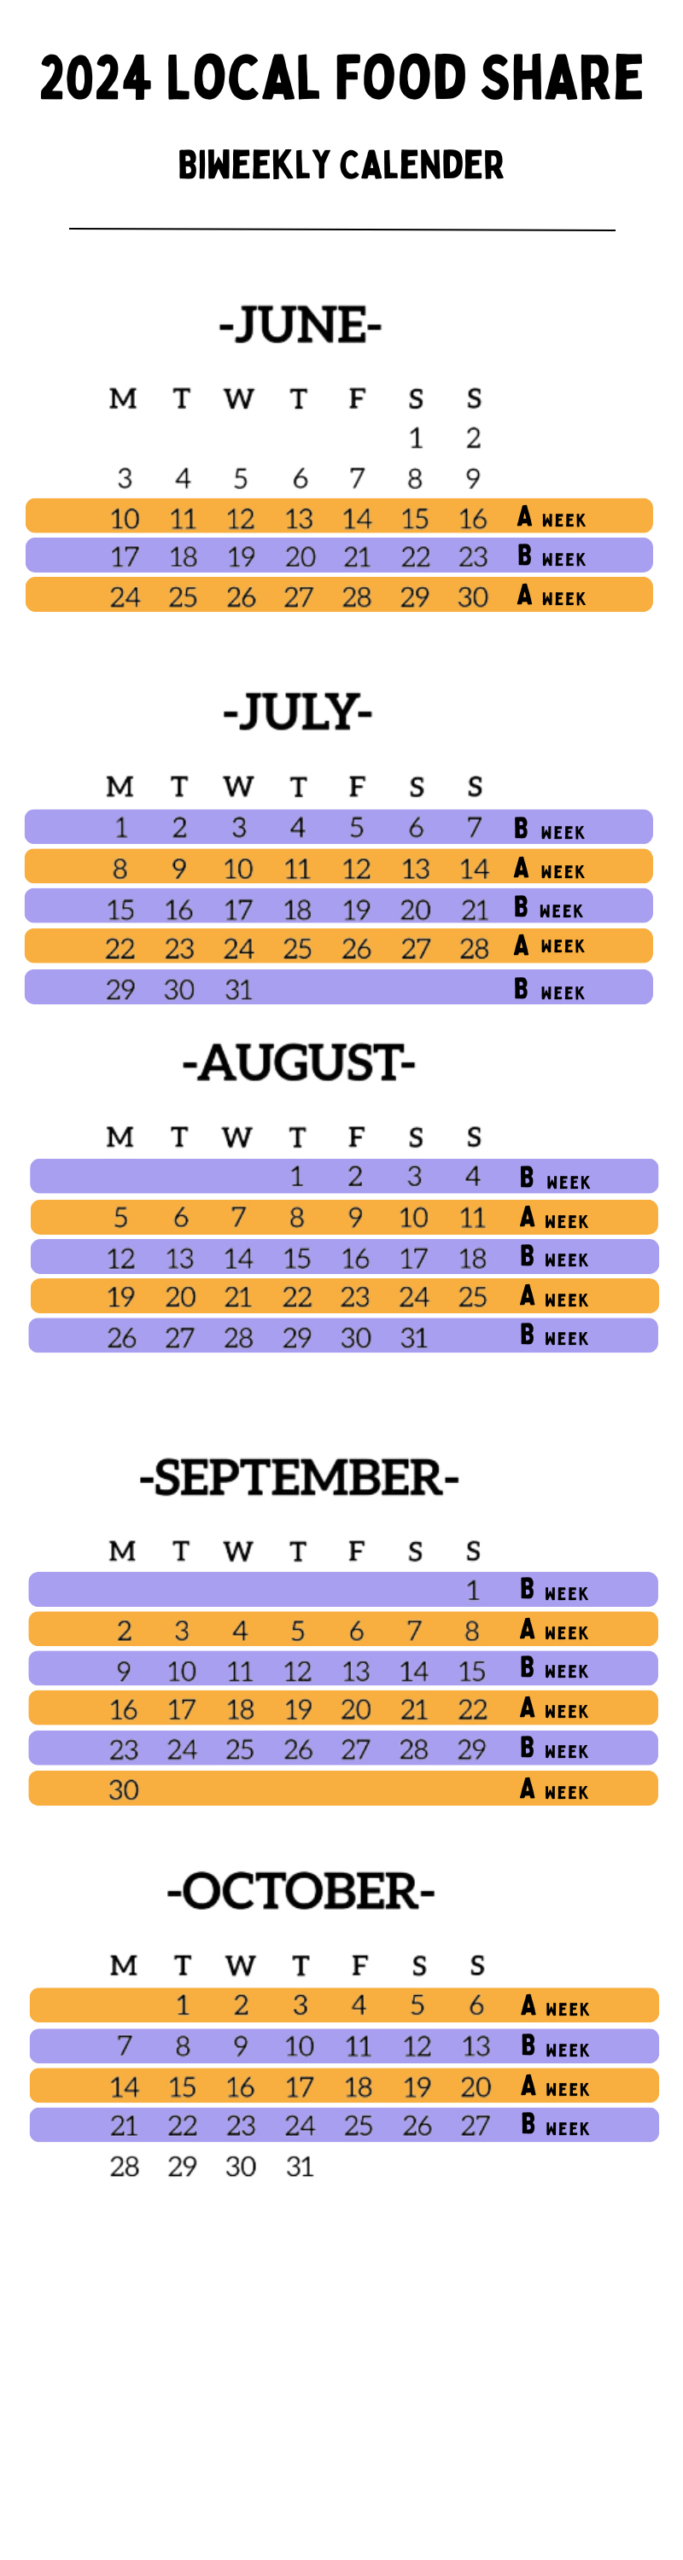 Biweekly Calendar - 2024 Local Food Share | Ebt Calendar For July 2024